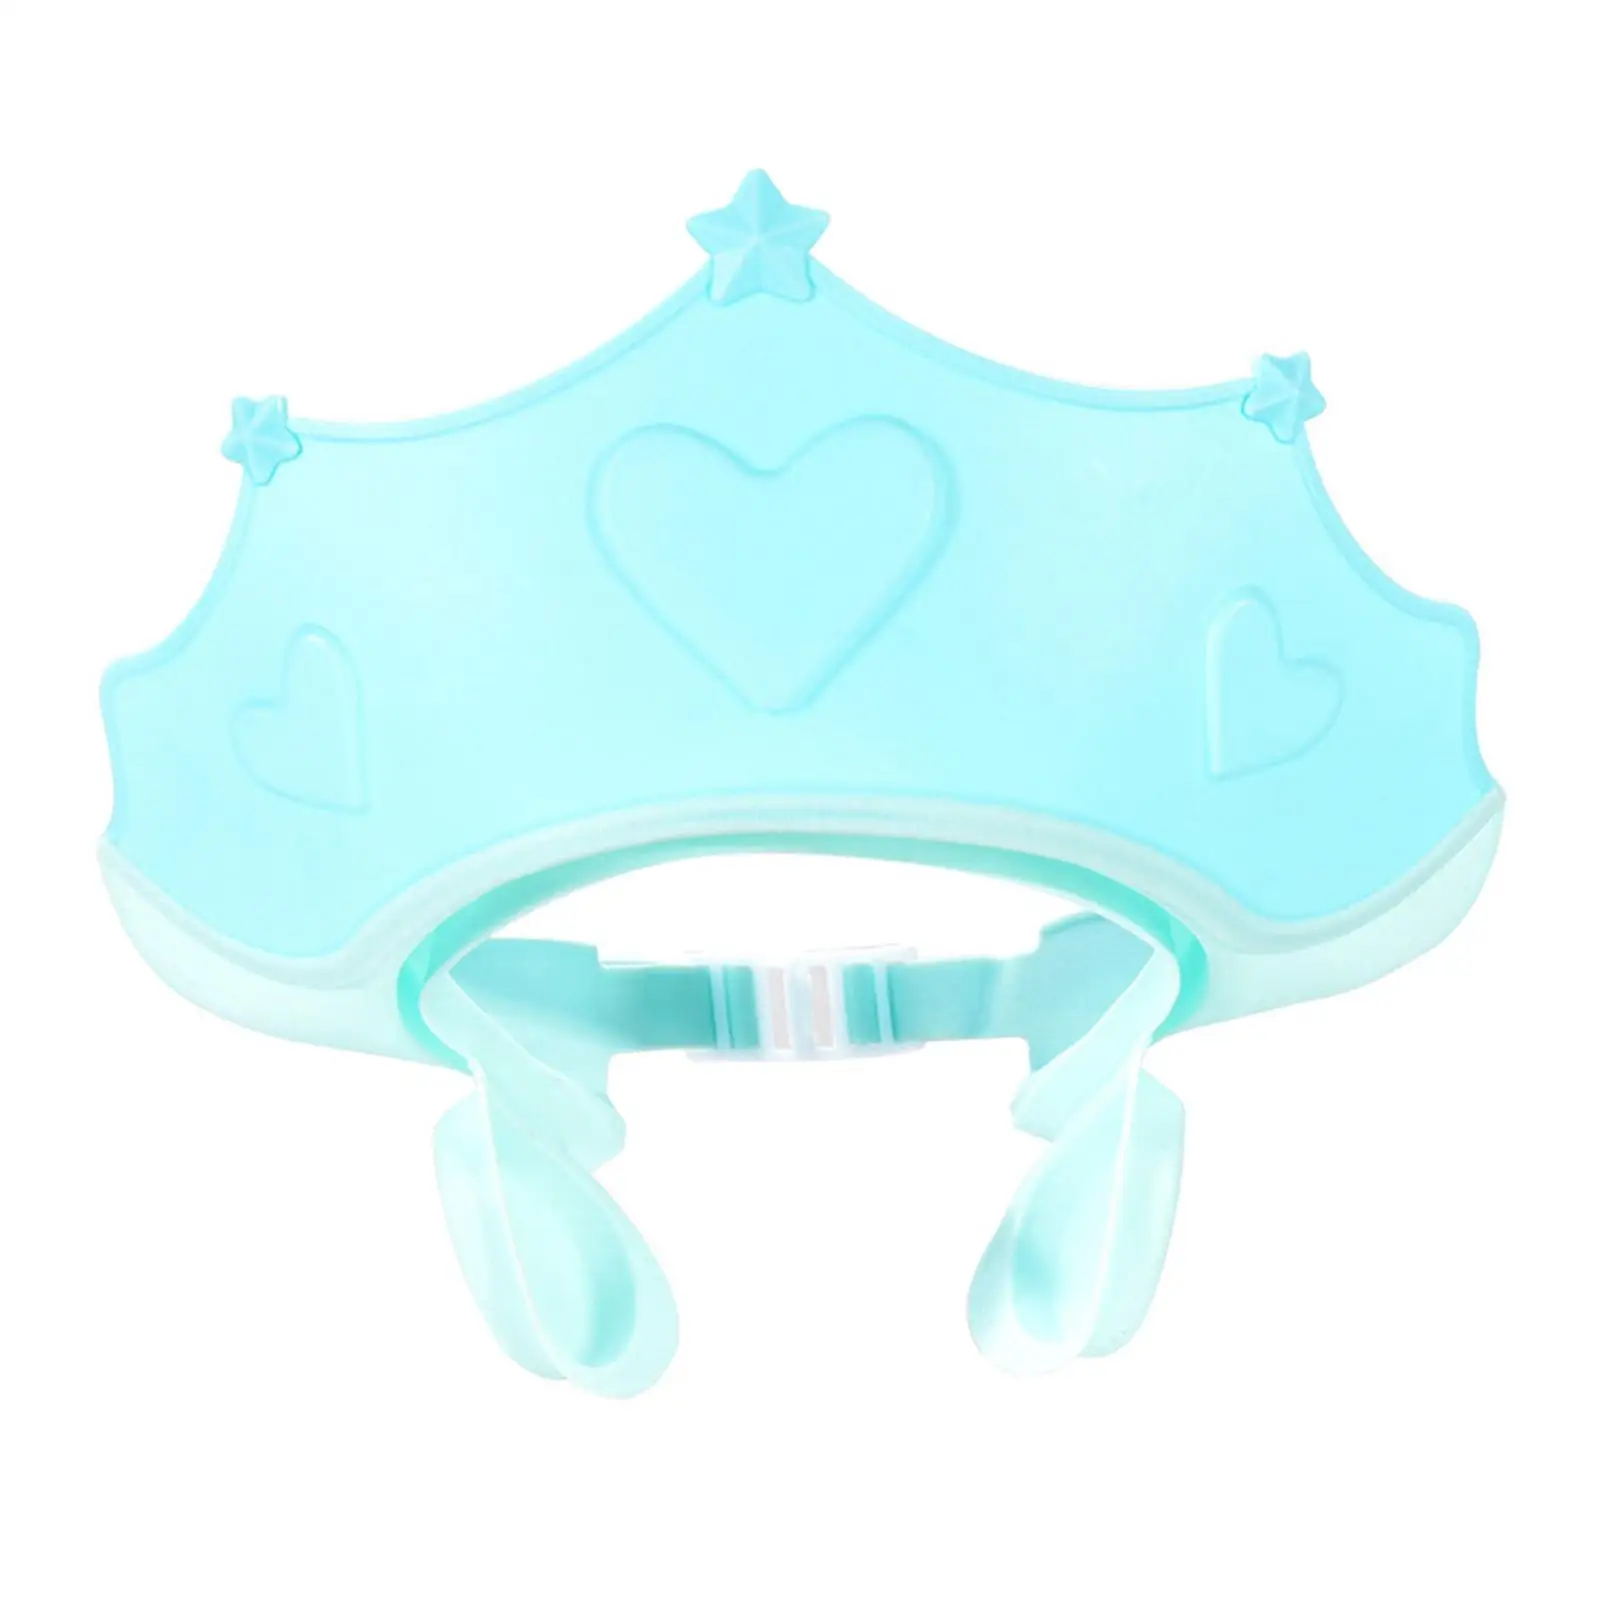  Shampoo Caps wash Water Shower Visor Hat Adjustable Bathing tub Head Hair Rinser Shield  Toddler Children Kids